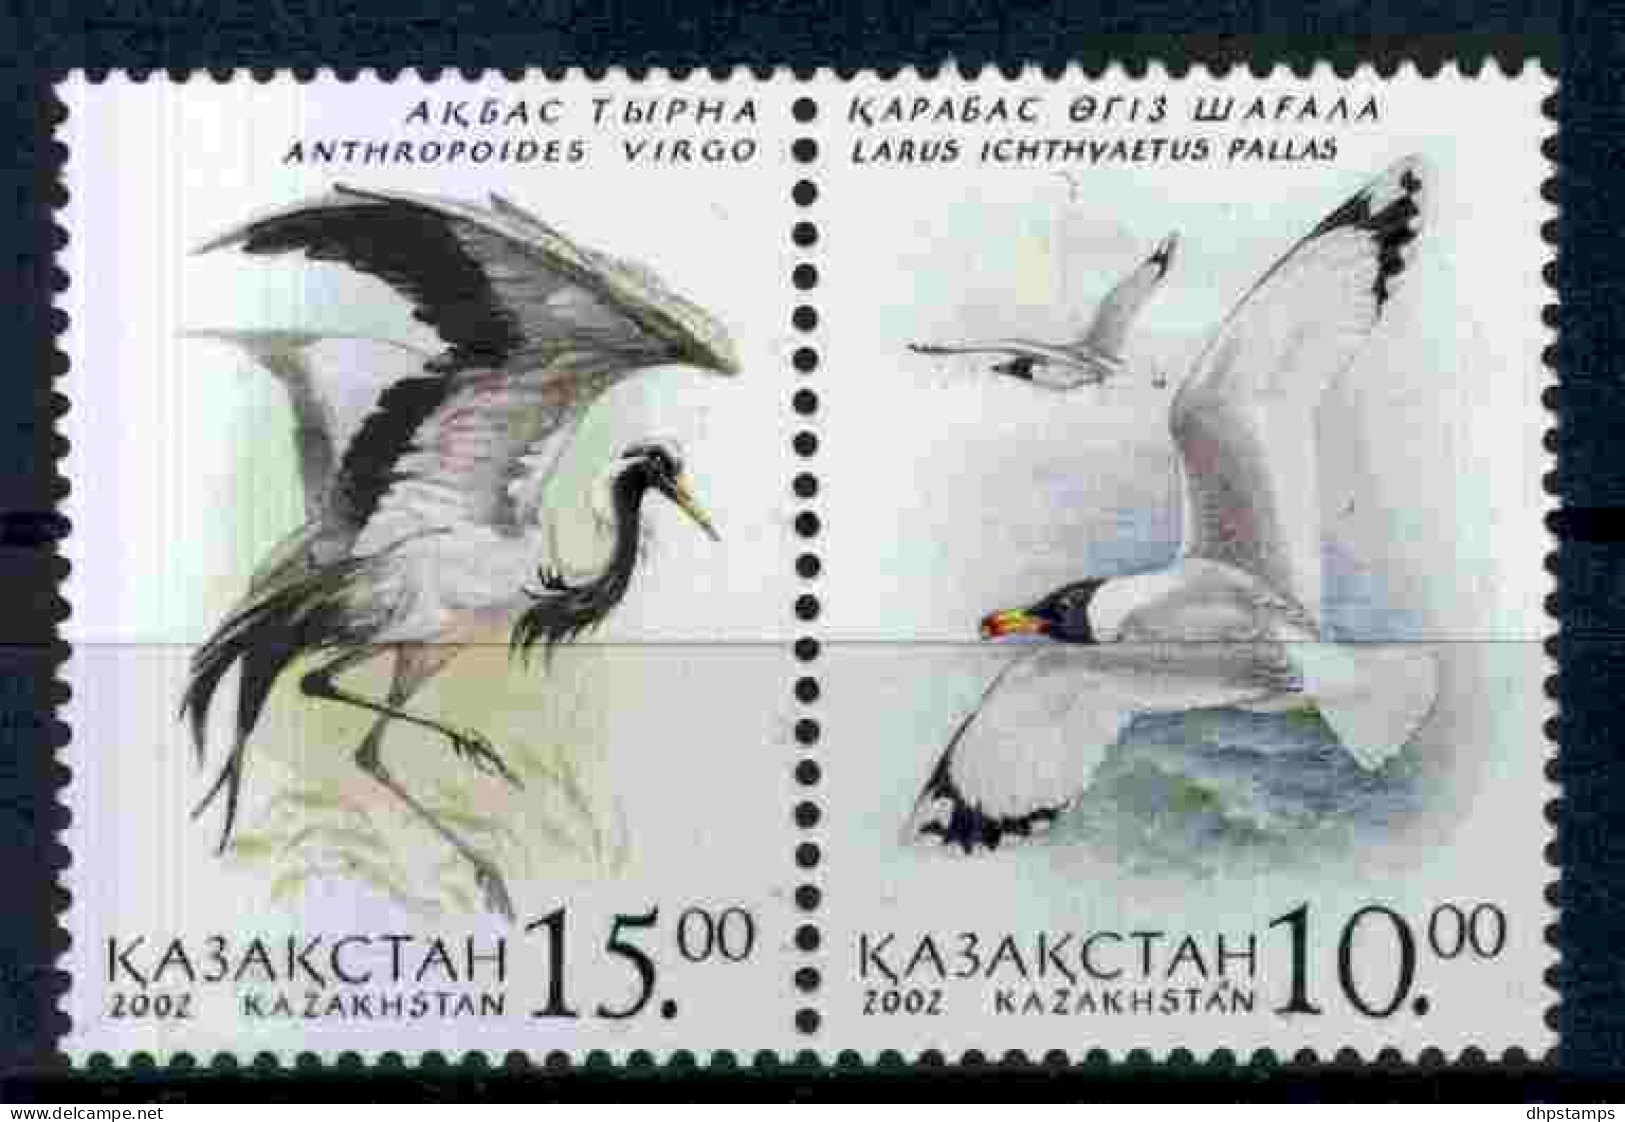 Kazakstan 2002 Birds Pair Y.T. 330/331 ** - Kazakhstan